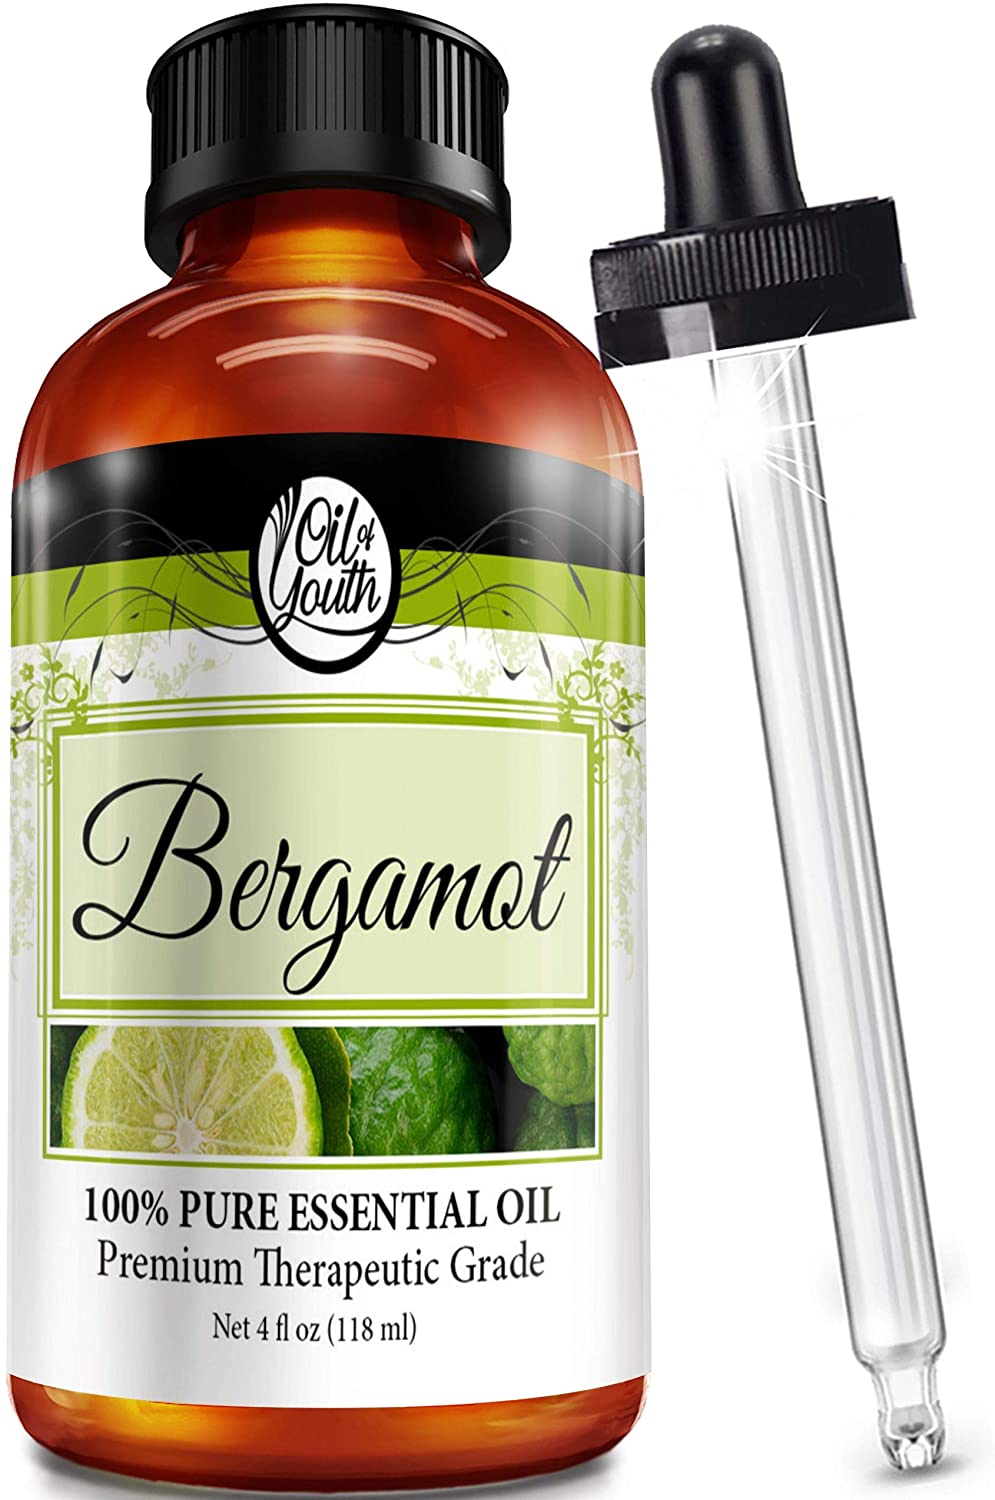 Oil Of Youth Premium Bergamot Essential Oil, 4-Ounce